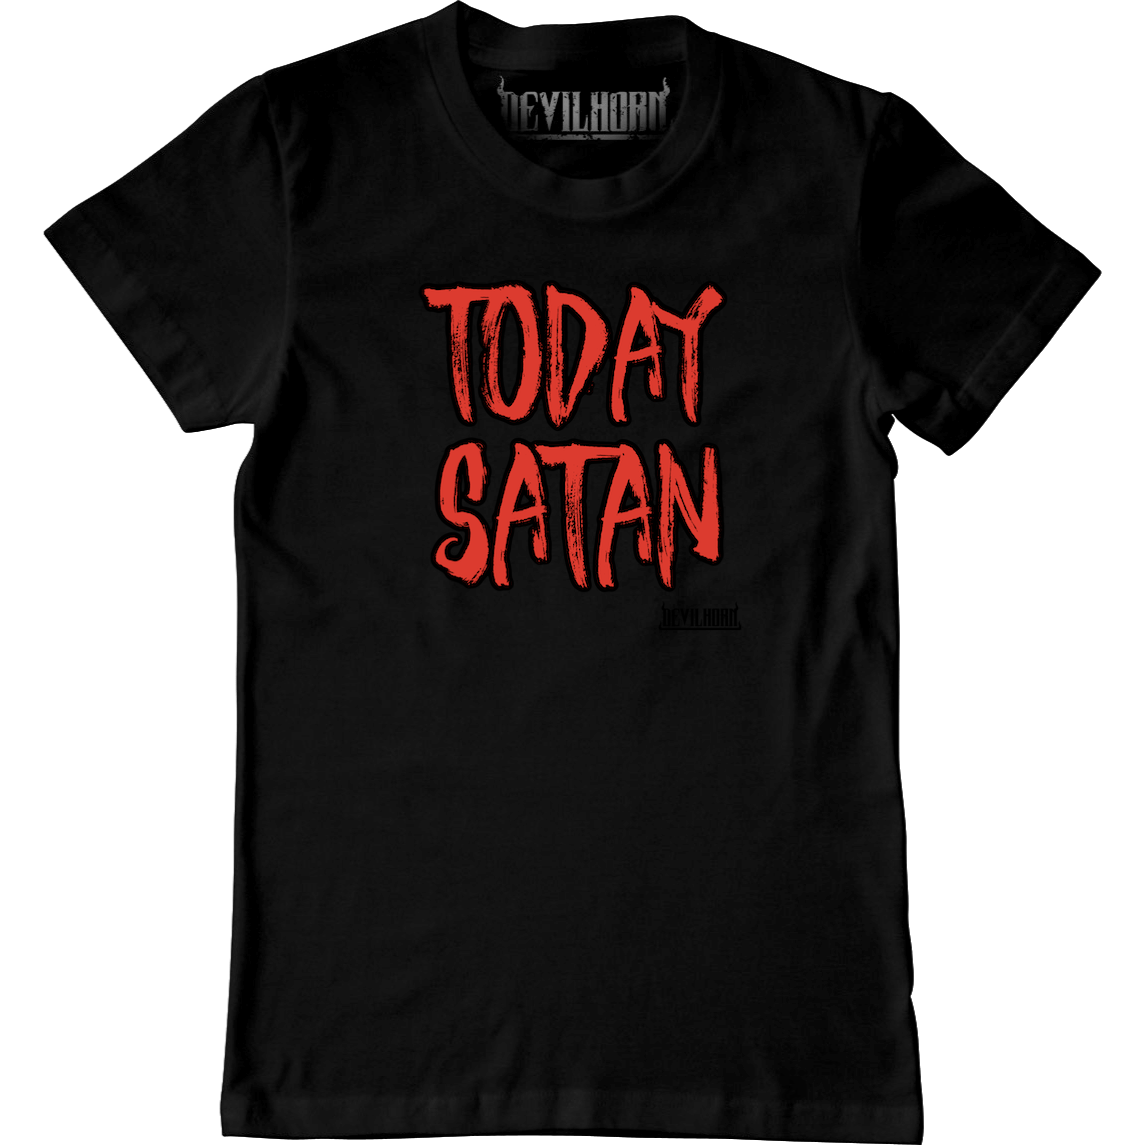 TODAY SATAN mens t shirt - DEVILHORN